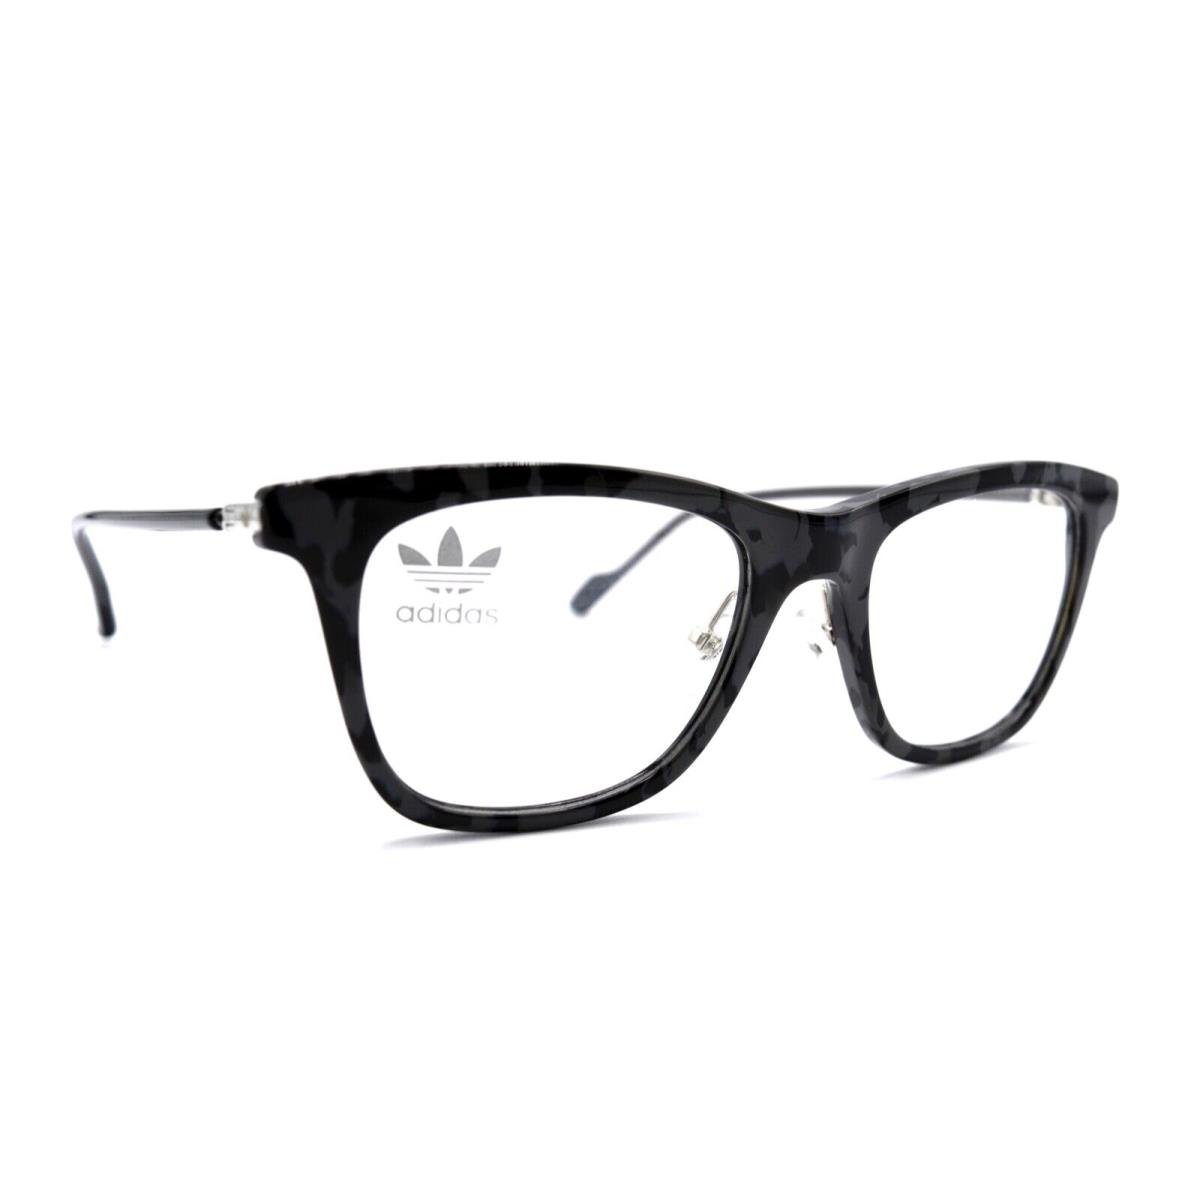 Adidas AOK050O.096.000 Black Grey Eyeglasses Frames RX 52-19 31